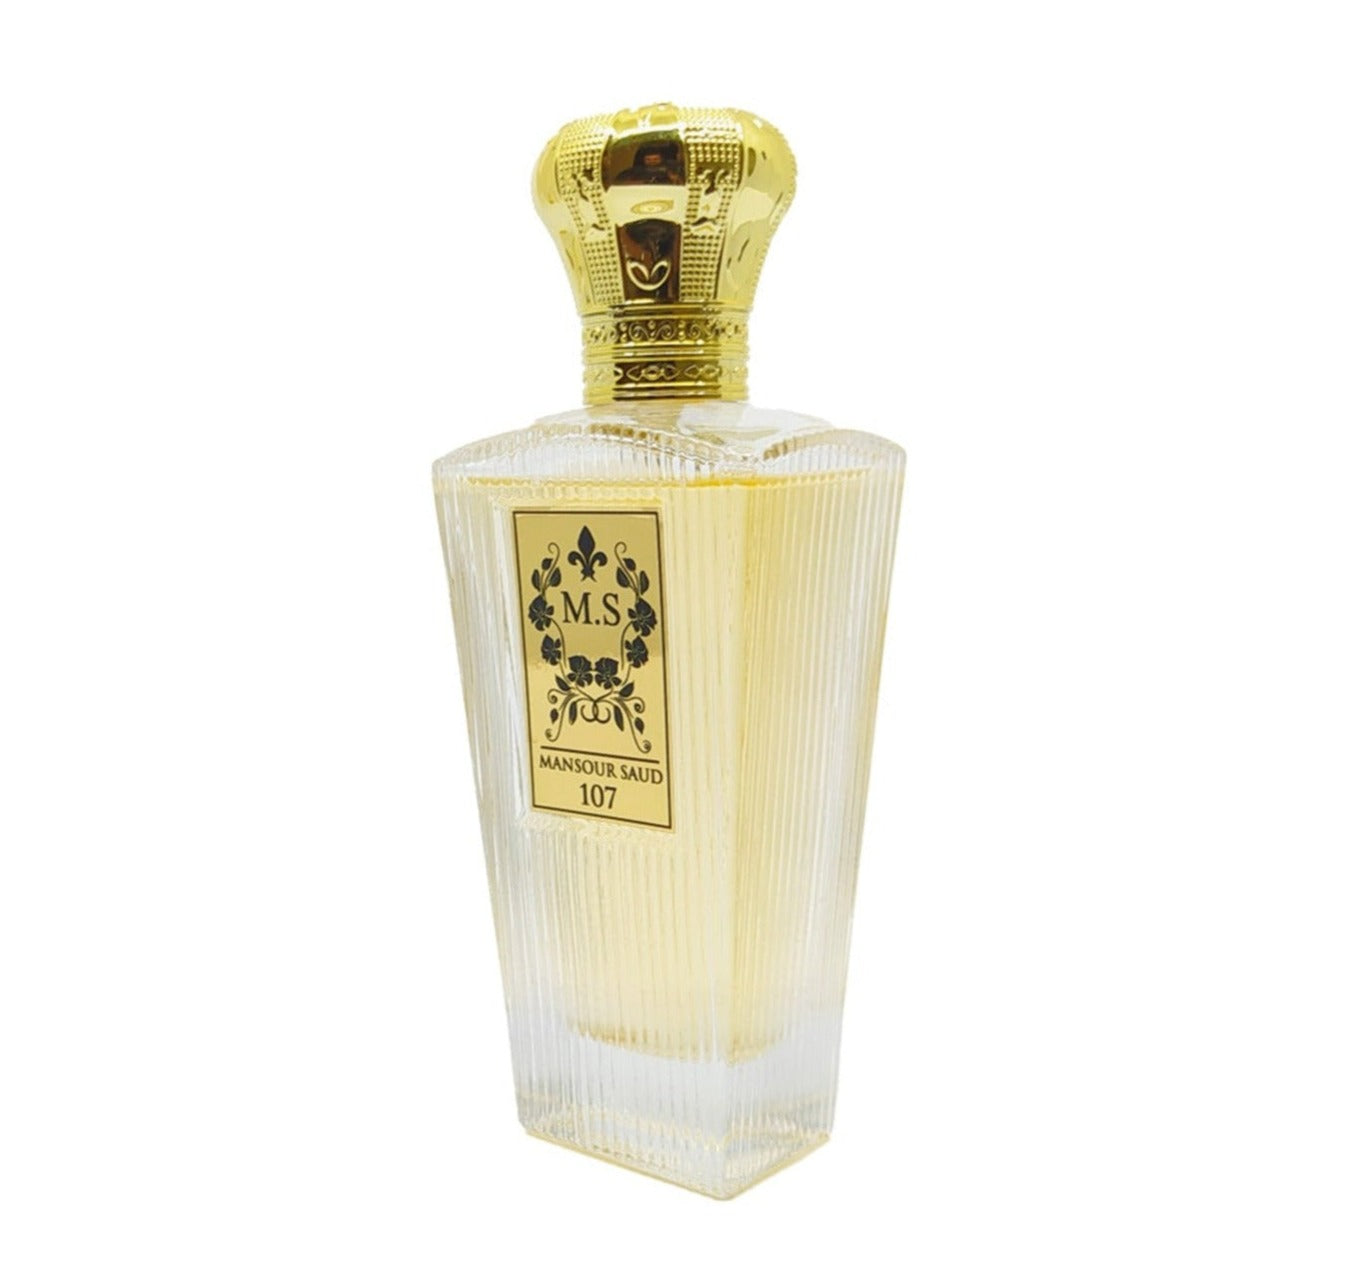 Mansour Saud Perfume107